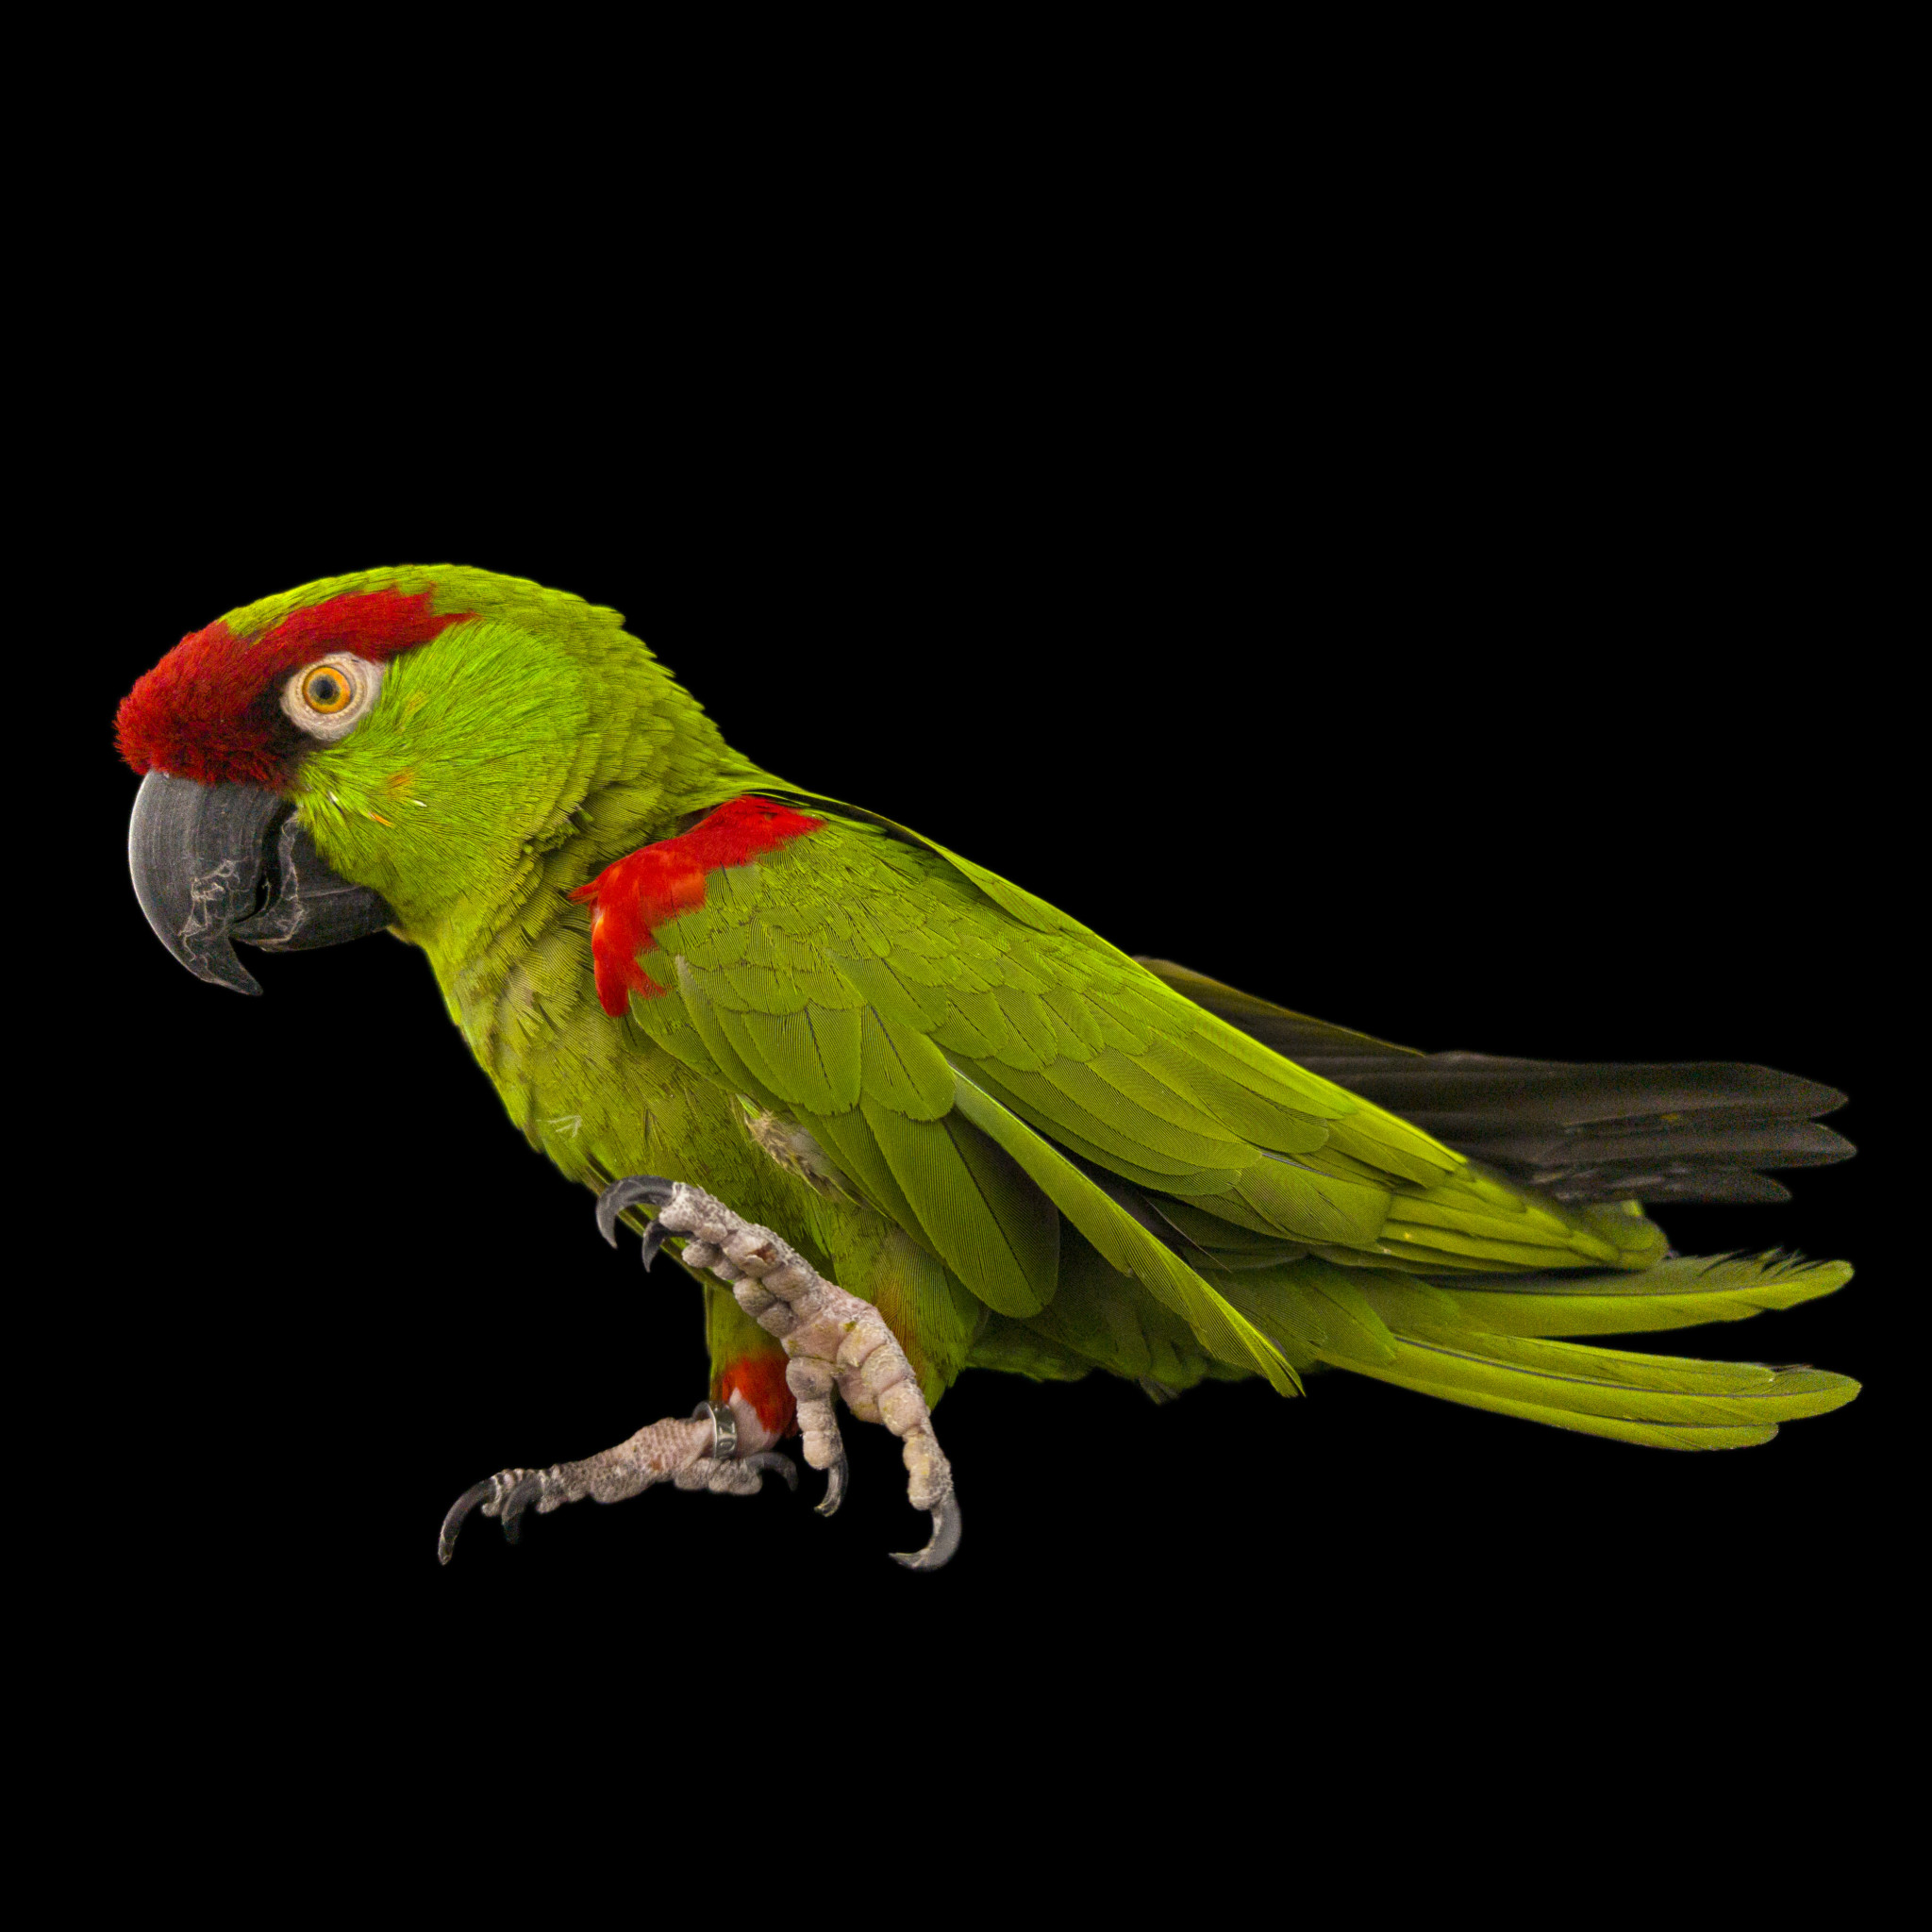 Parrots names. Thick billed Parrot. Черноплечий большеклювый попугай. Broad-billed Parrot. Parrot names.